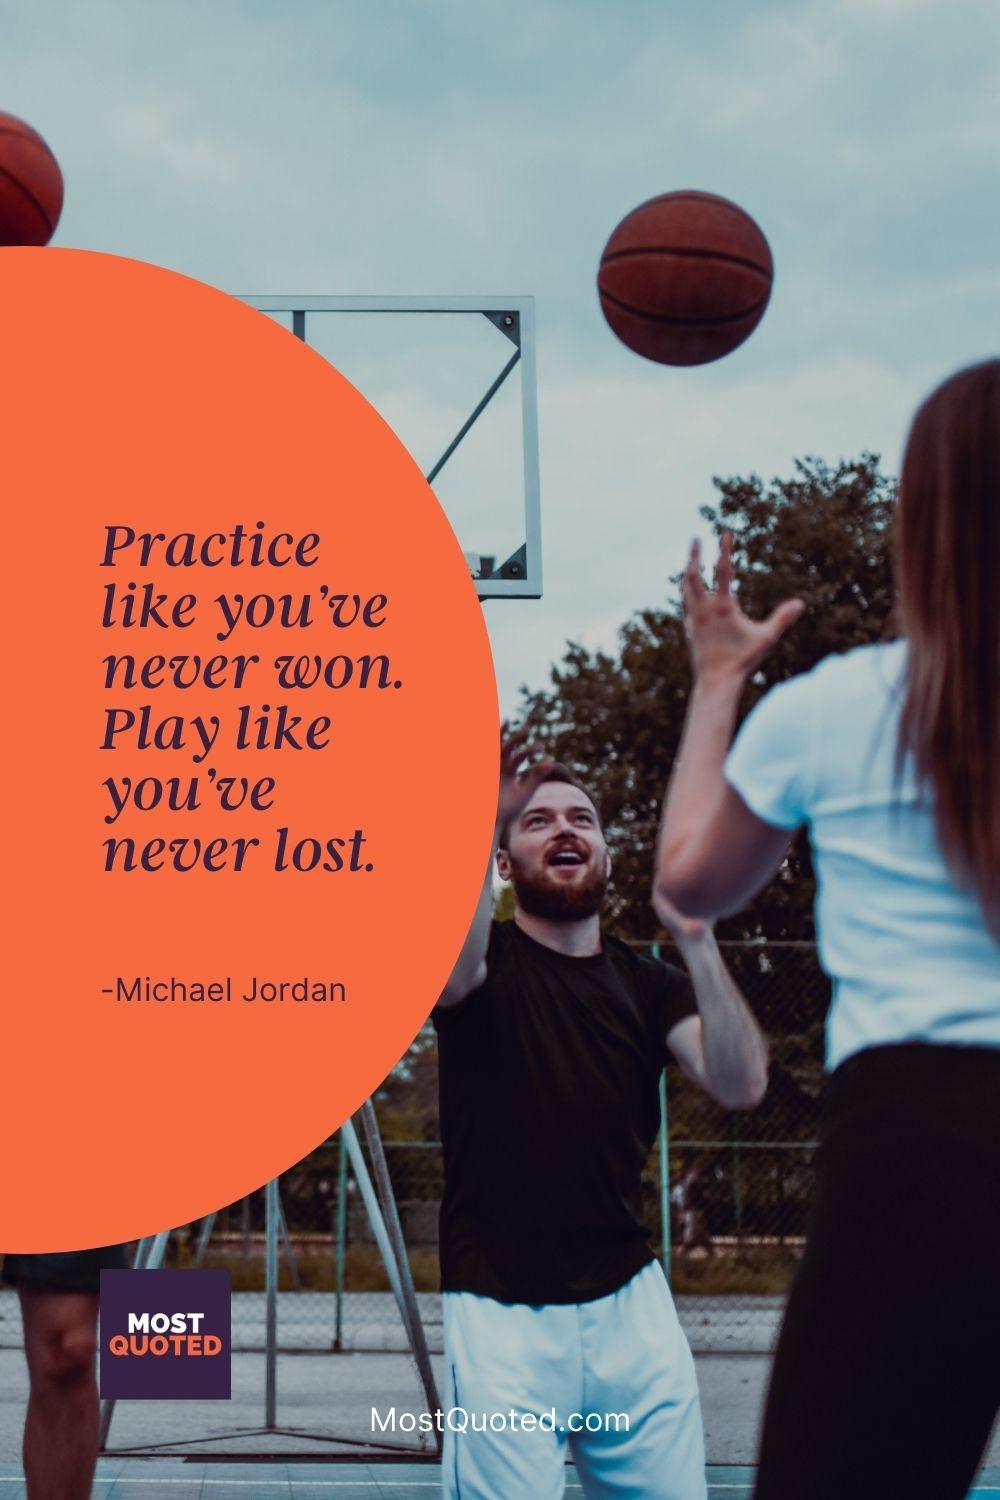 Practice like you’ve never won. Play like you’ve never lost. - Michael Jordan